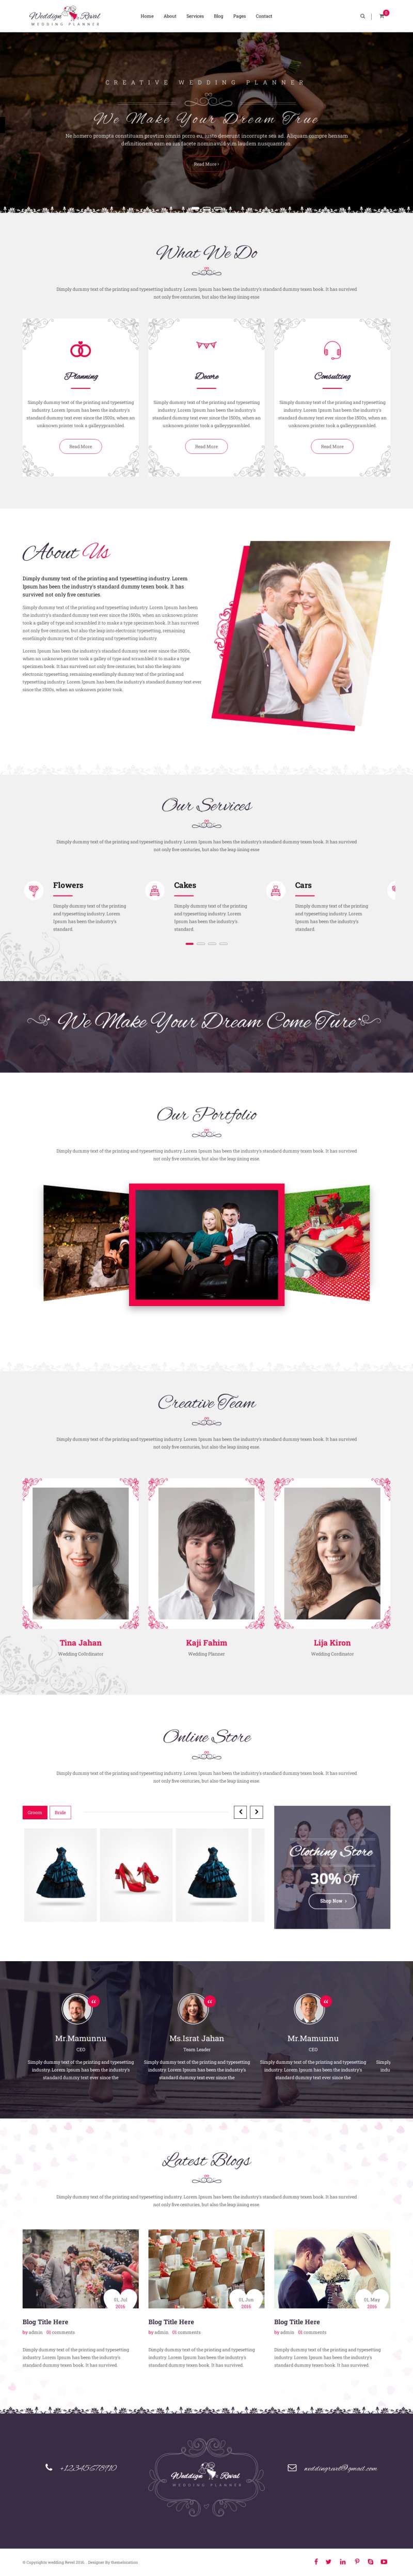 html5大气的婚纱摄影婚礼策划公司网站模板